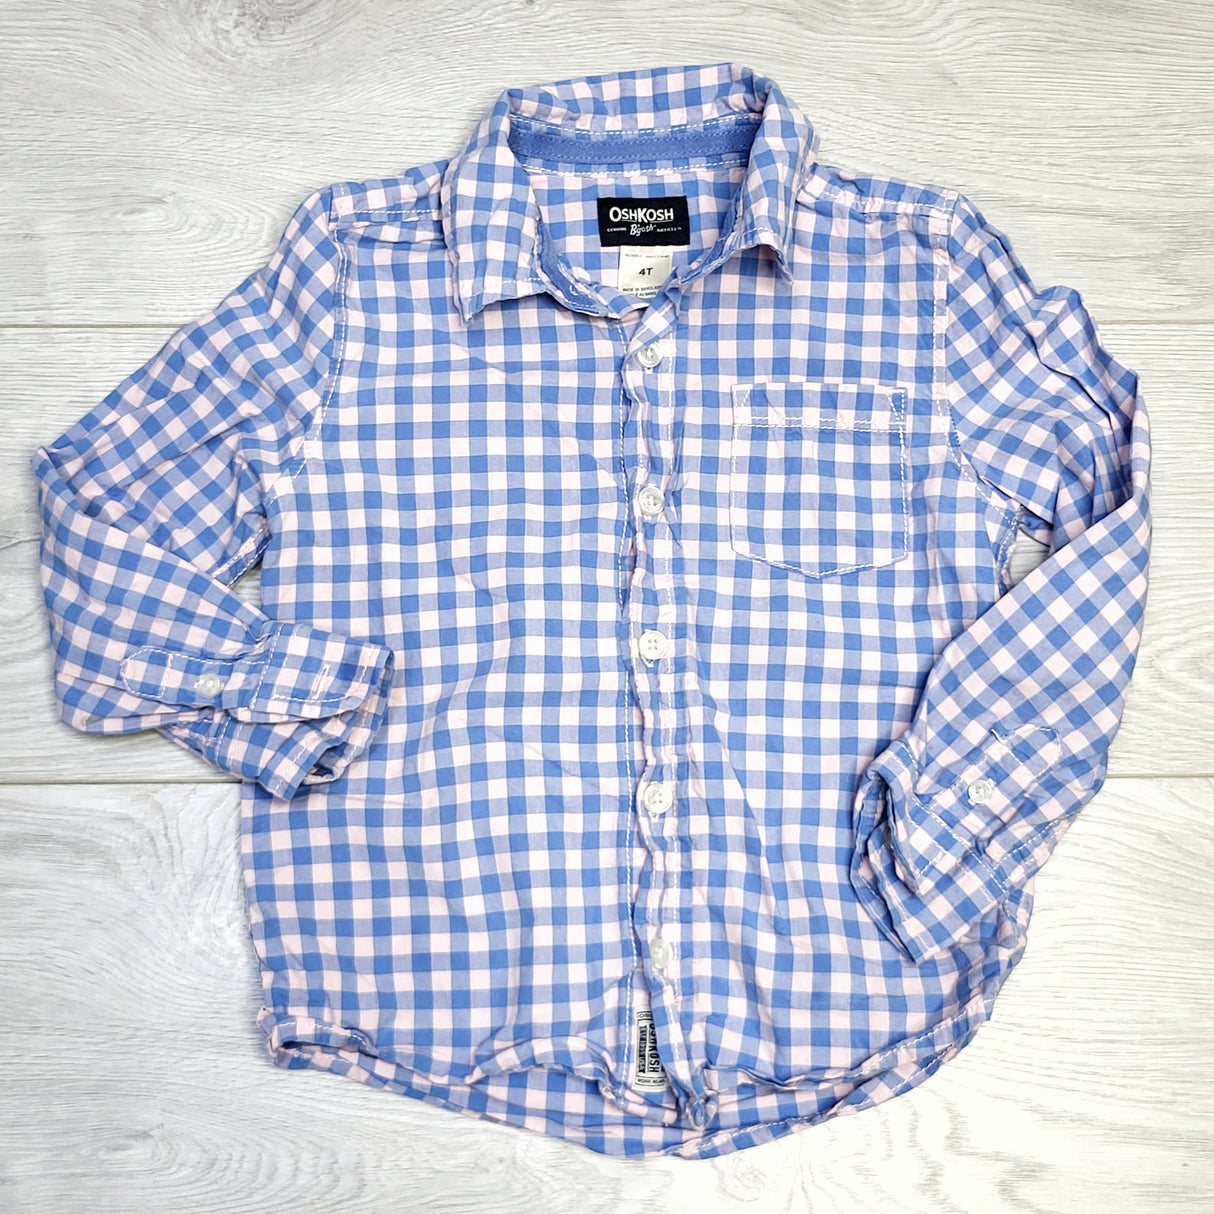 KSAL3 - Oshkosh blue and pink plaid button down shirt, size 4T